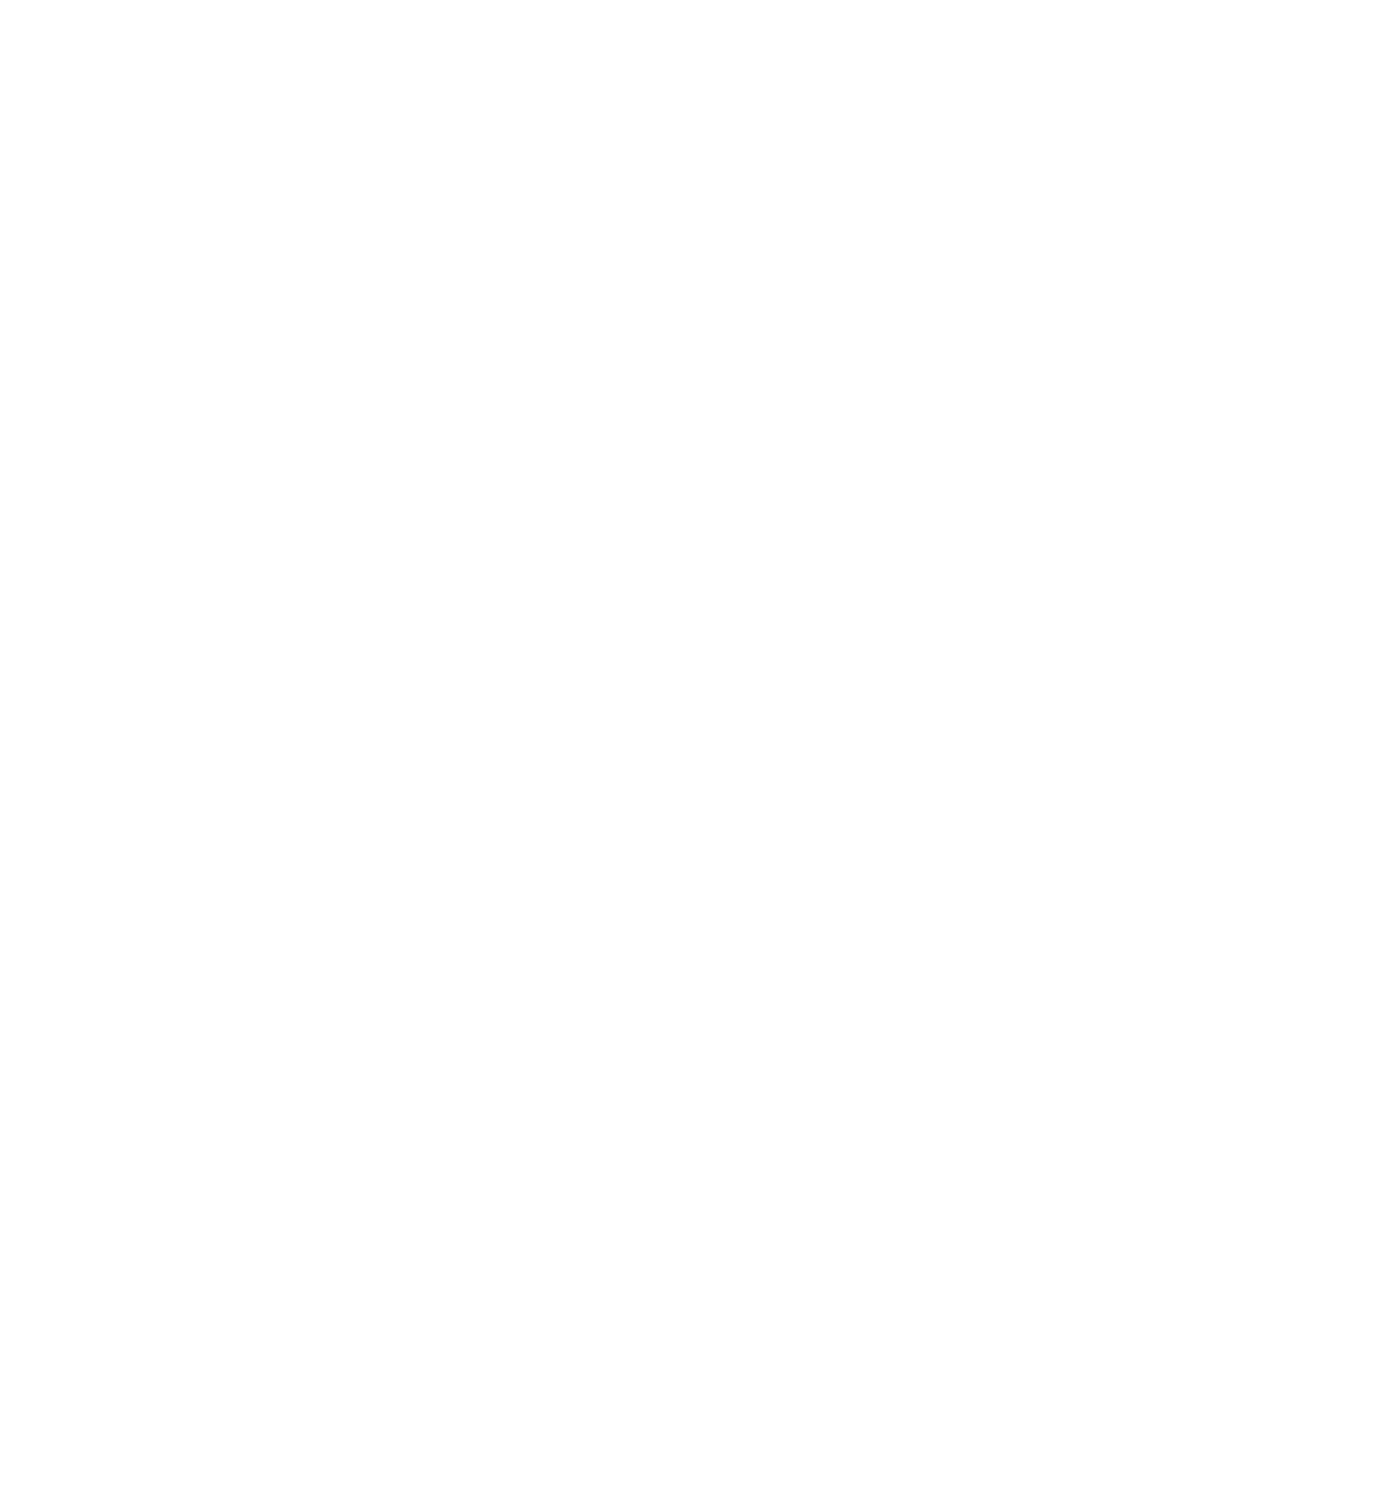 Tatanka's science atom logo